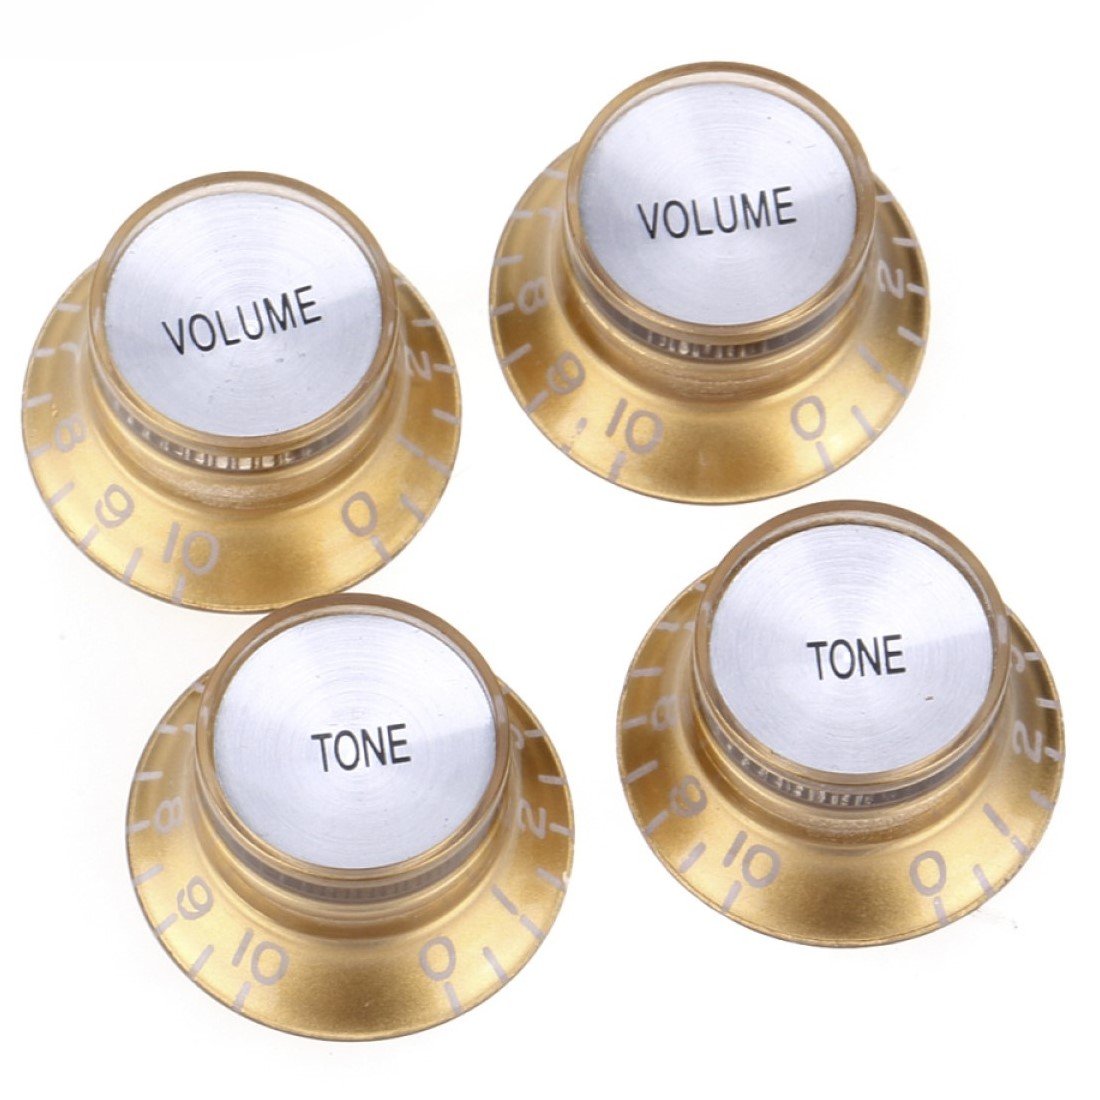 thumbnail 12 - Top Hat Speed Control Knobs Les Paul Volume Tone Knobs Metric Size Plastic